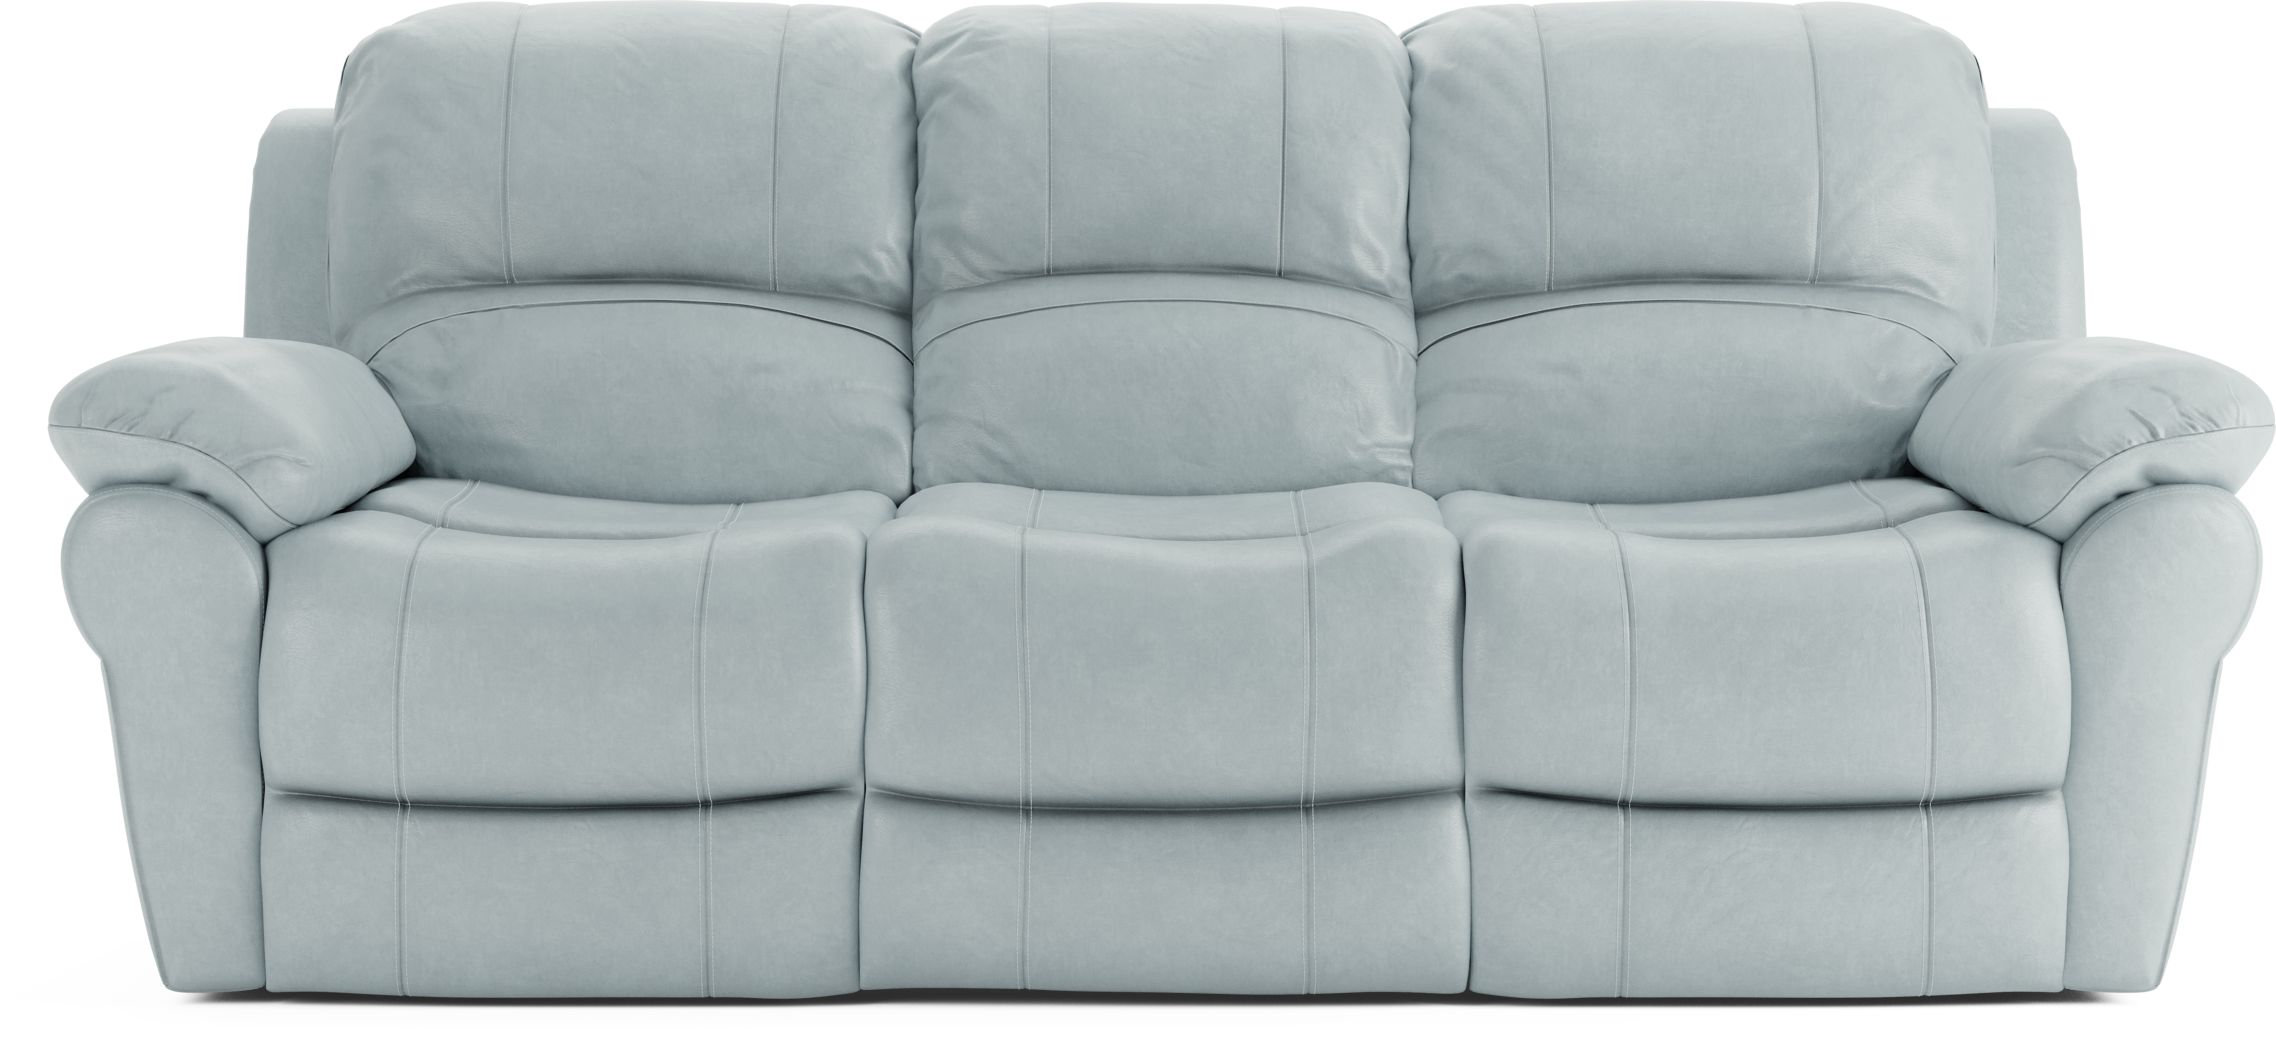 aqua leather reclining sofa